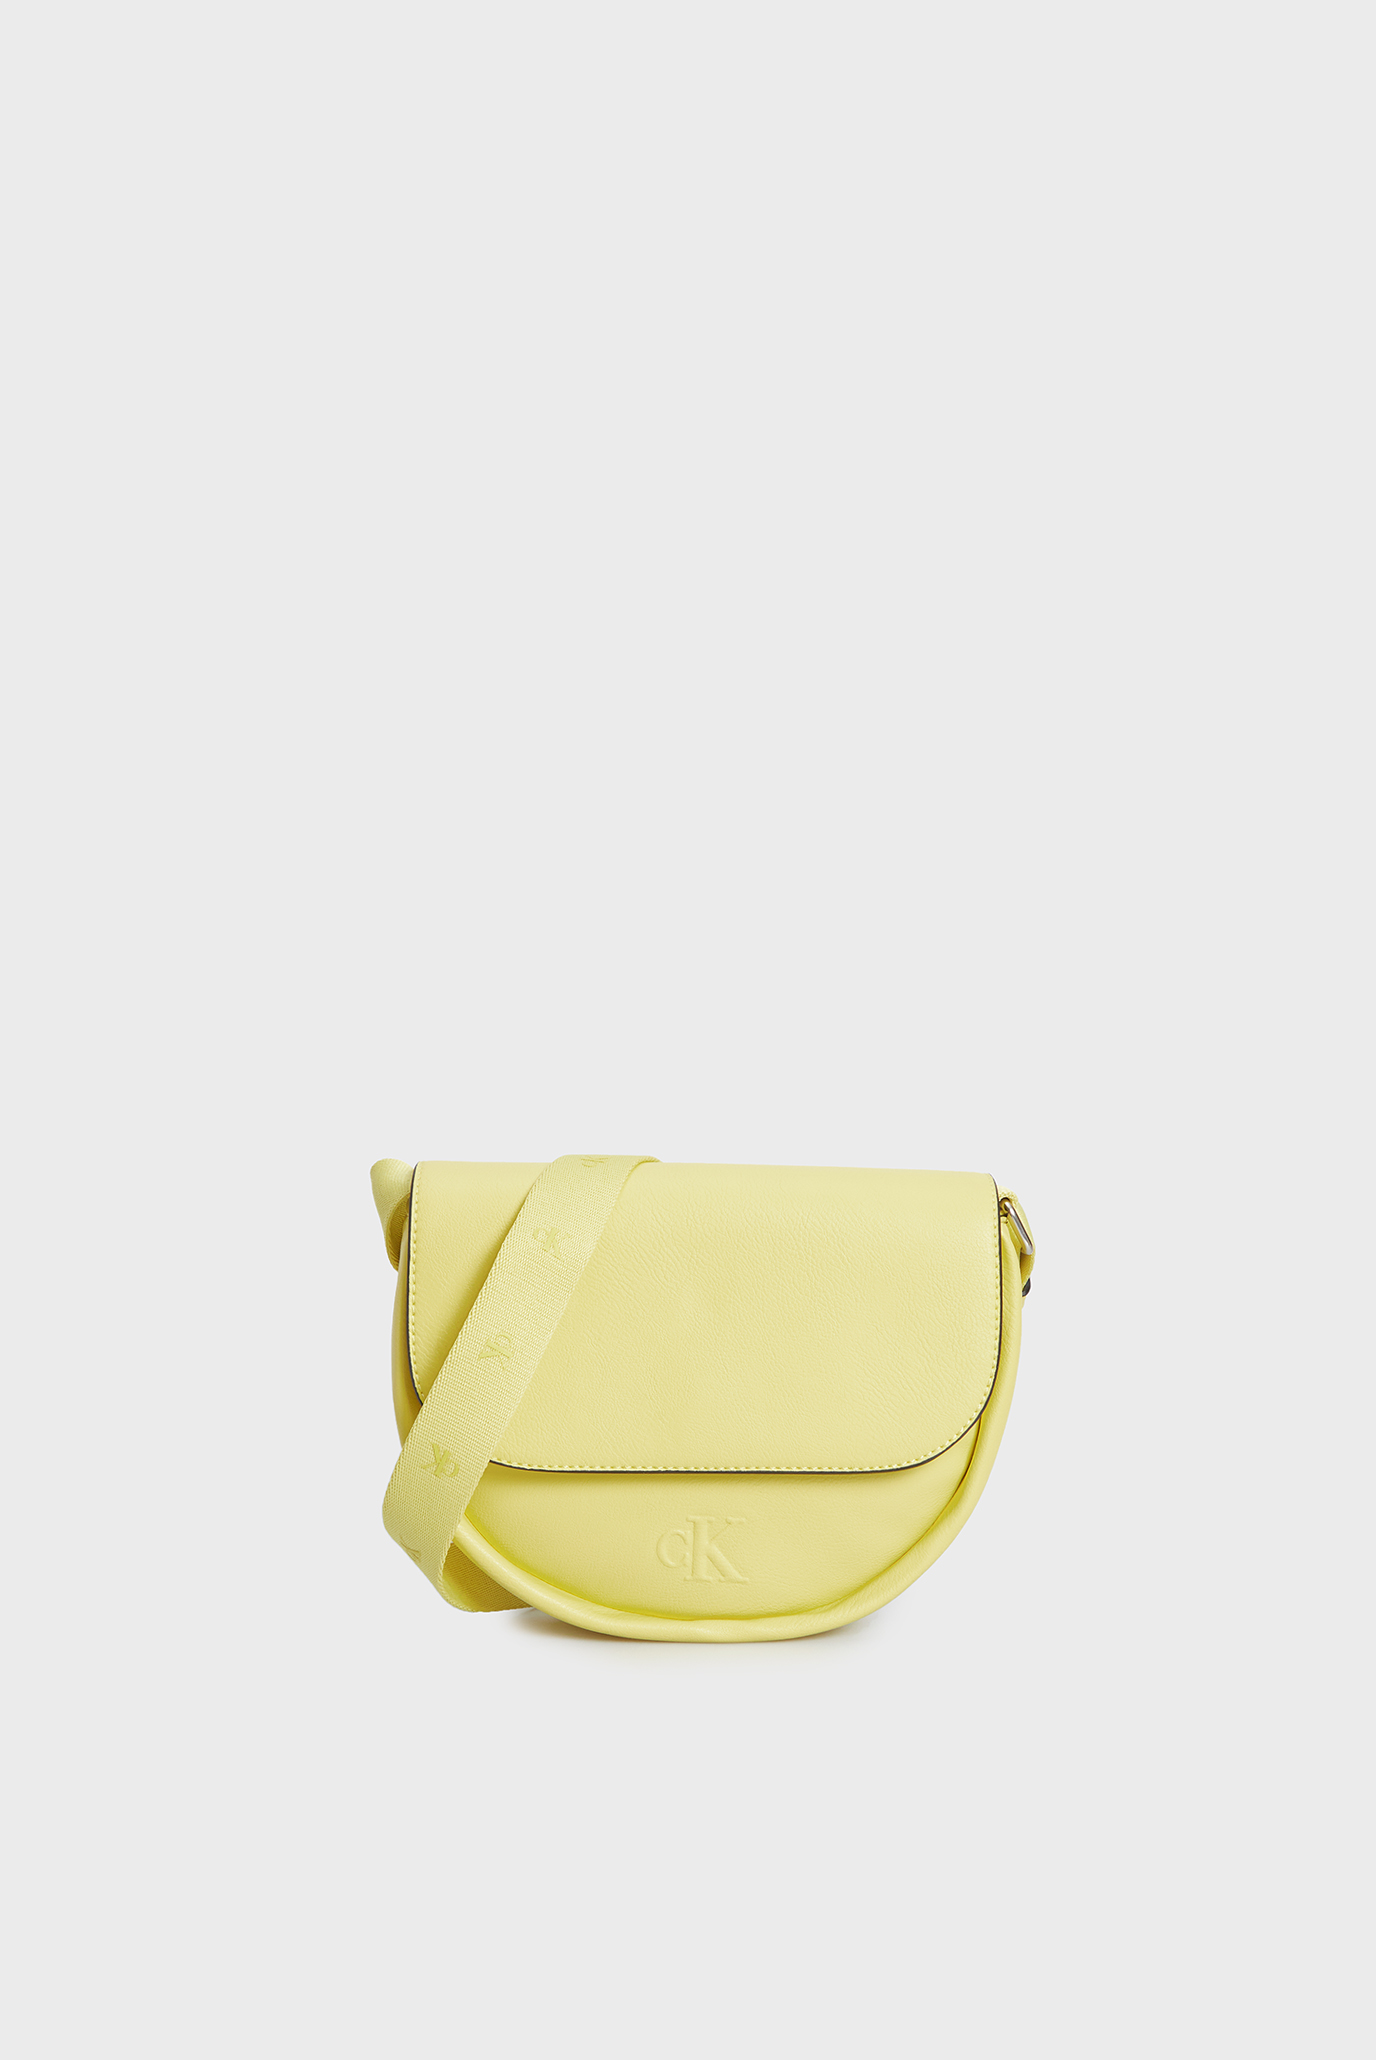 Женская желтая сумка ULTRALIGHT SADDLE22 PU 1